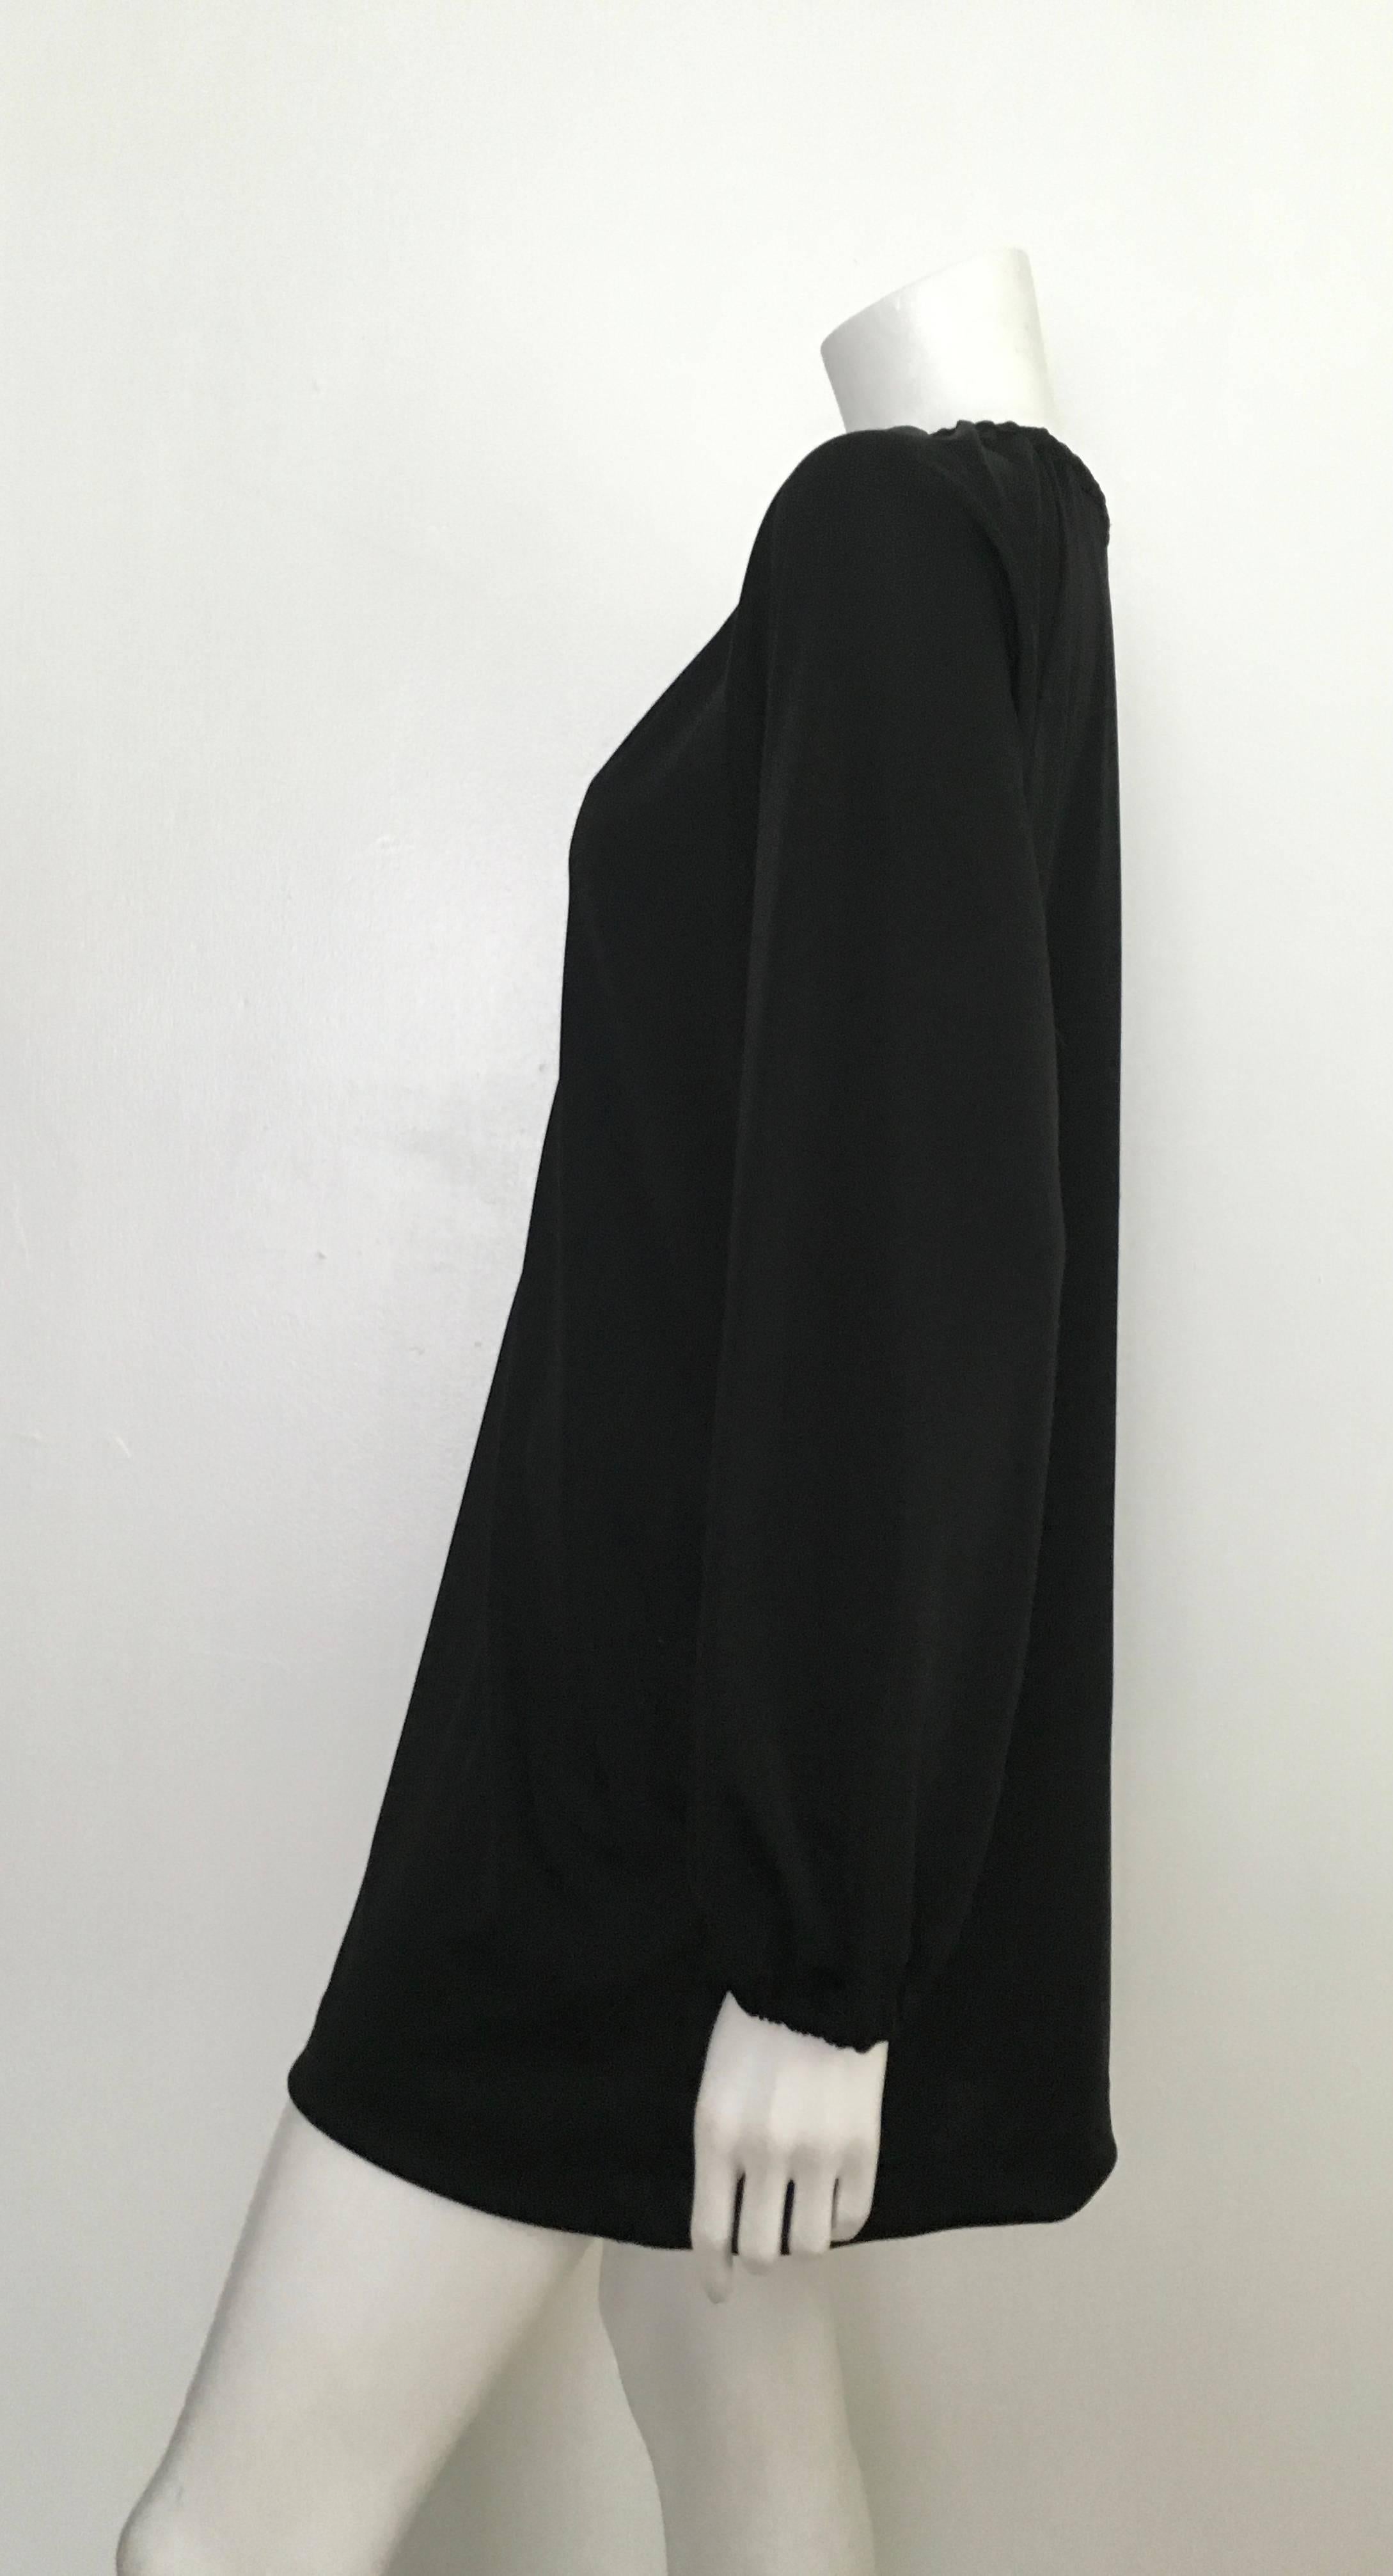 Geoffrey Beene 1970s Black Mini Dress Size Small. For Sale 3